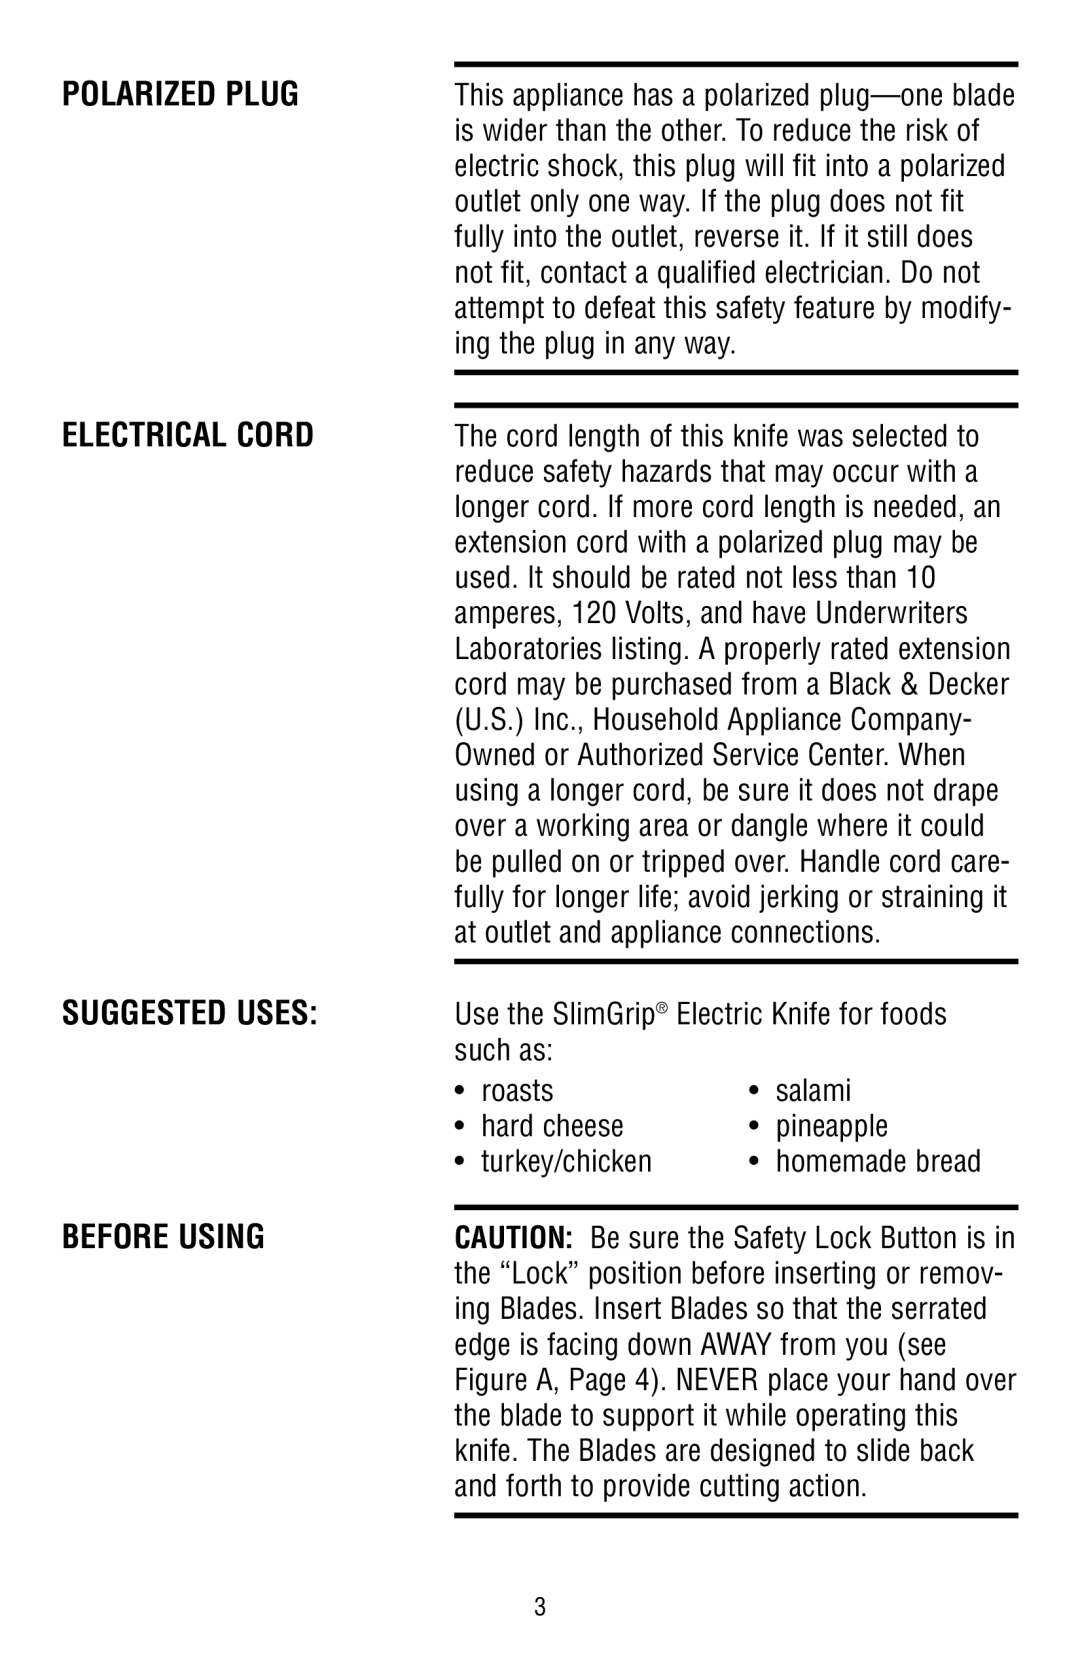 Black & Decker EK200, EK100 manual Polarized Plug, Electrical Cord, Suggested Uses, Before Using 